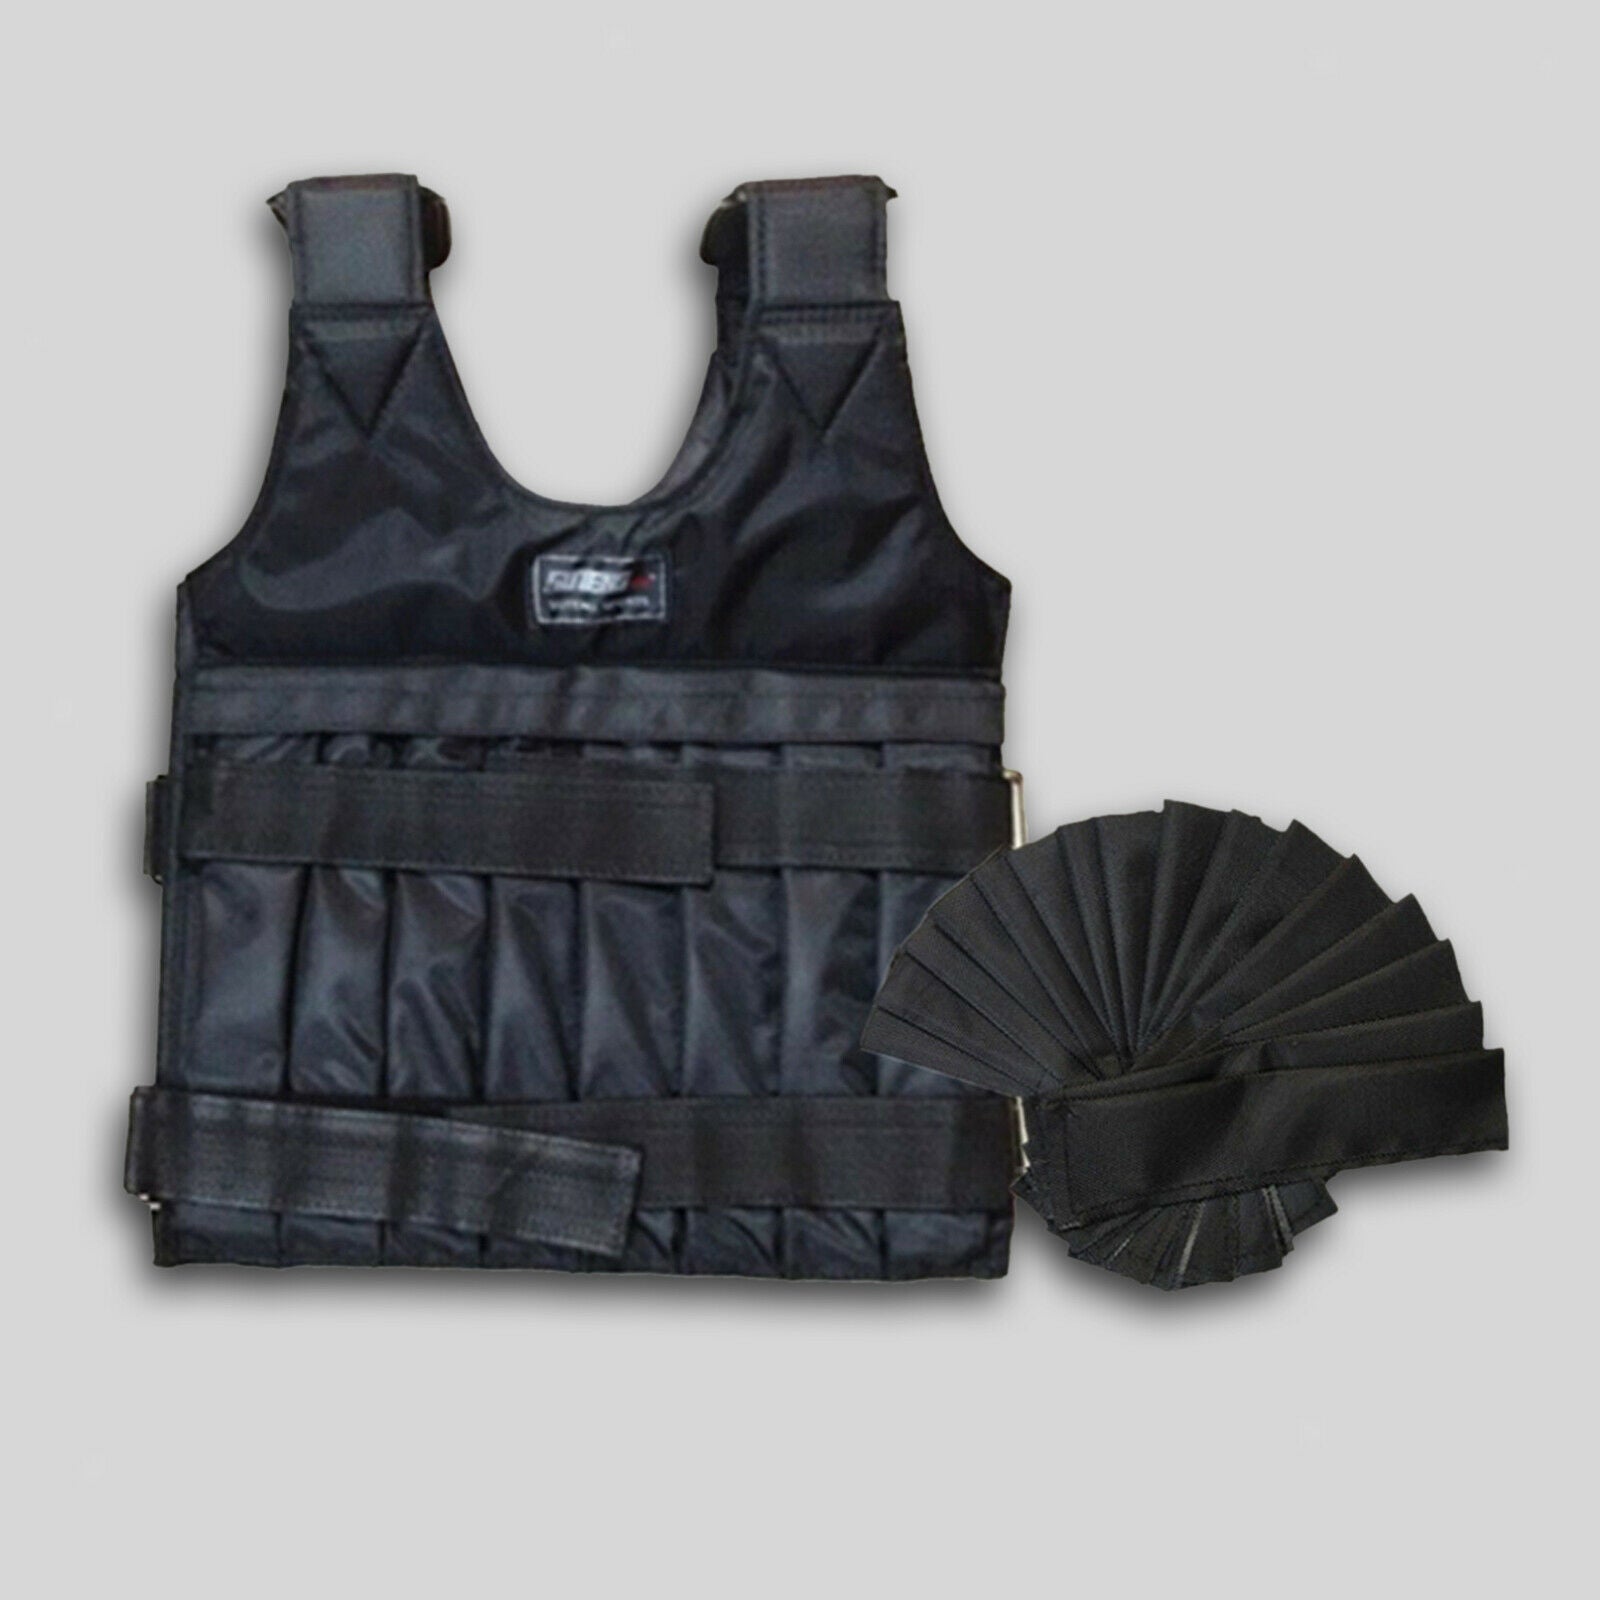 20kg Adjustable Weighted Workout Vest Fitness Workout Empty Vest